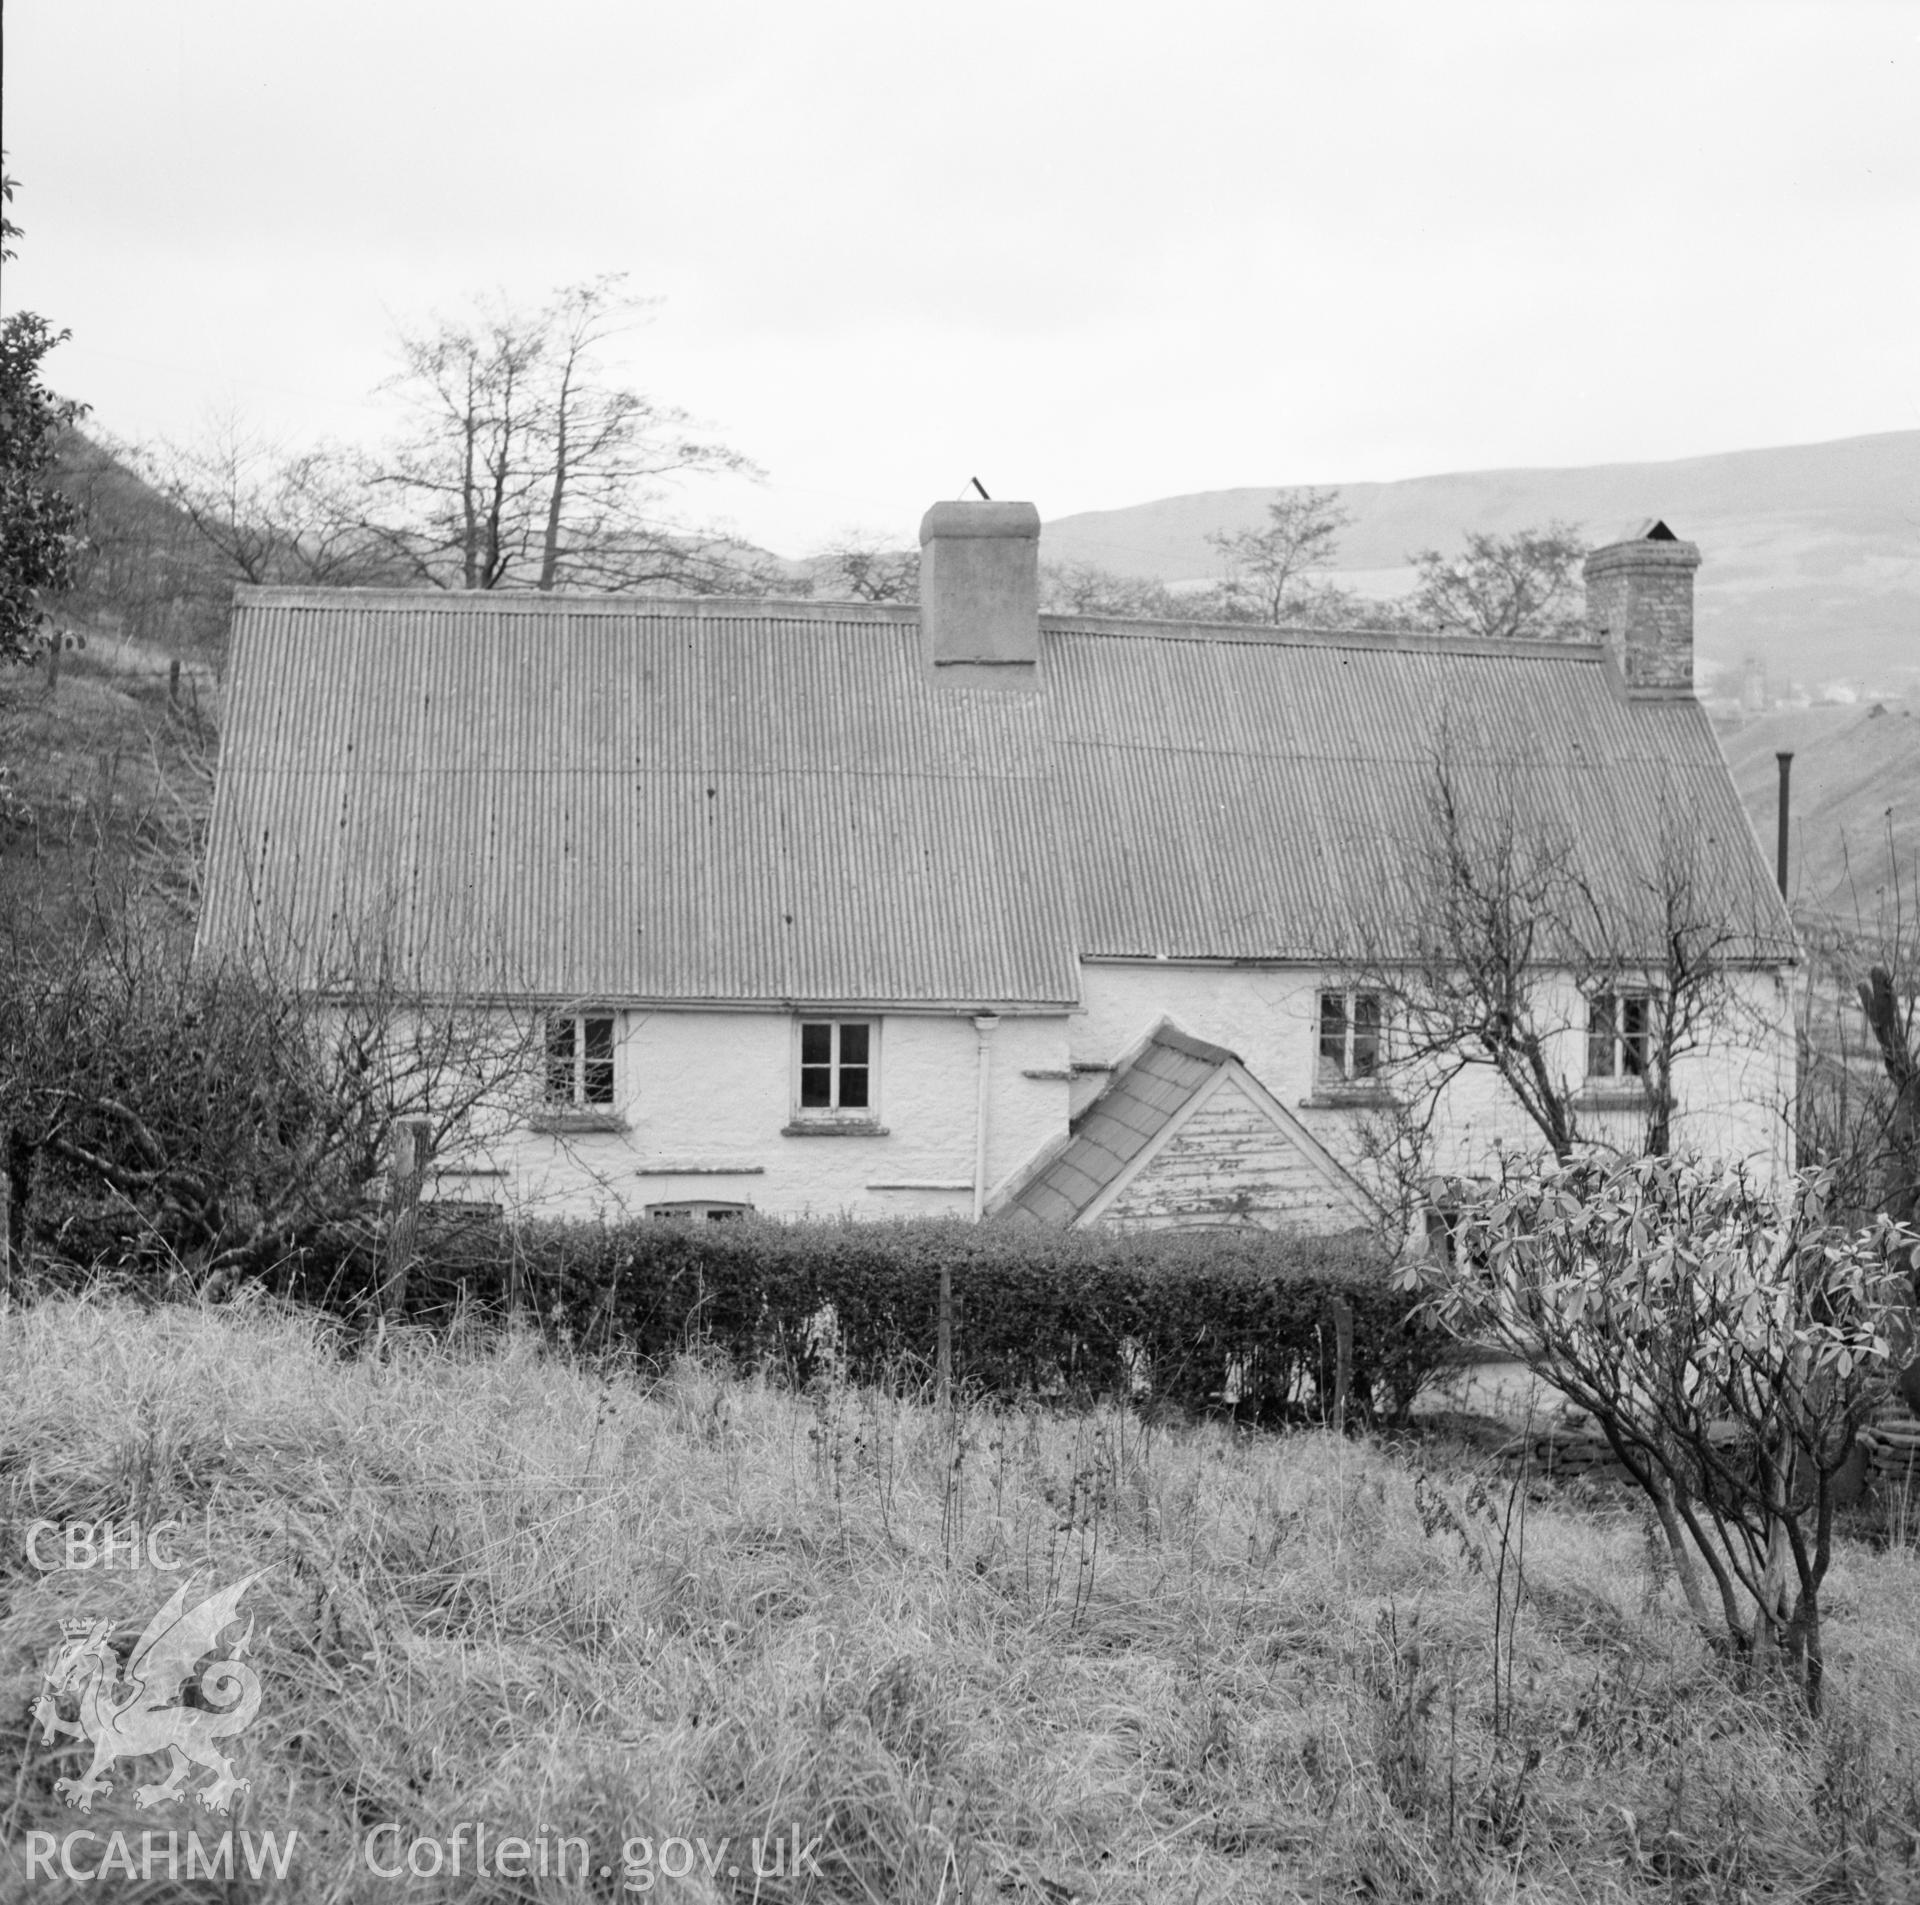 Digital copy of a black and white negative showing Nantdyrys, Llandyfodwg, taken 25th November 1965.